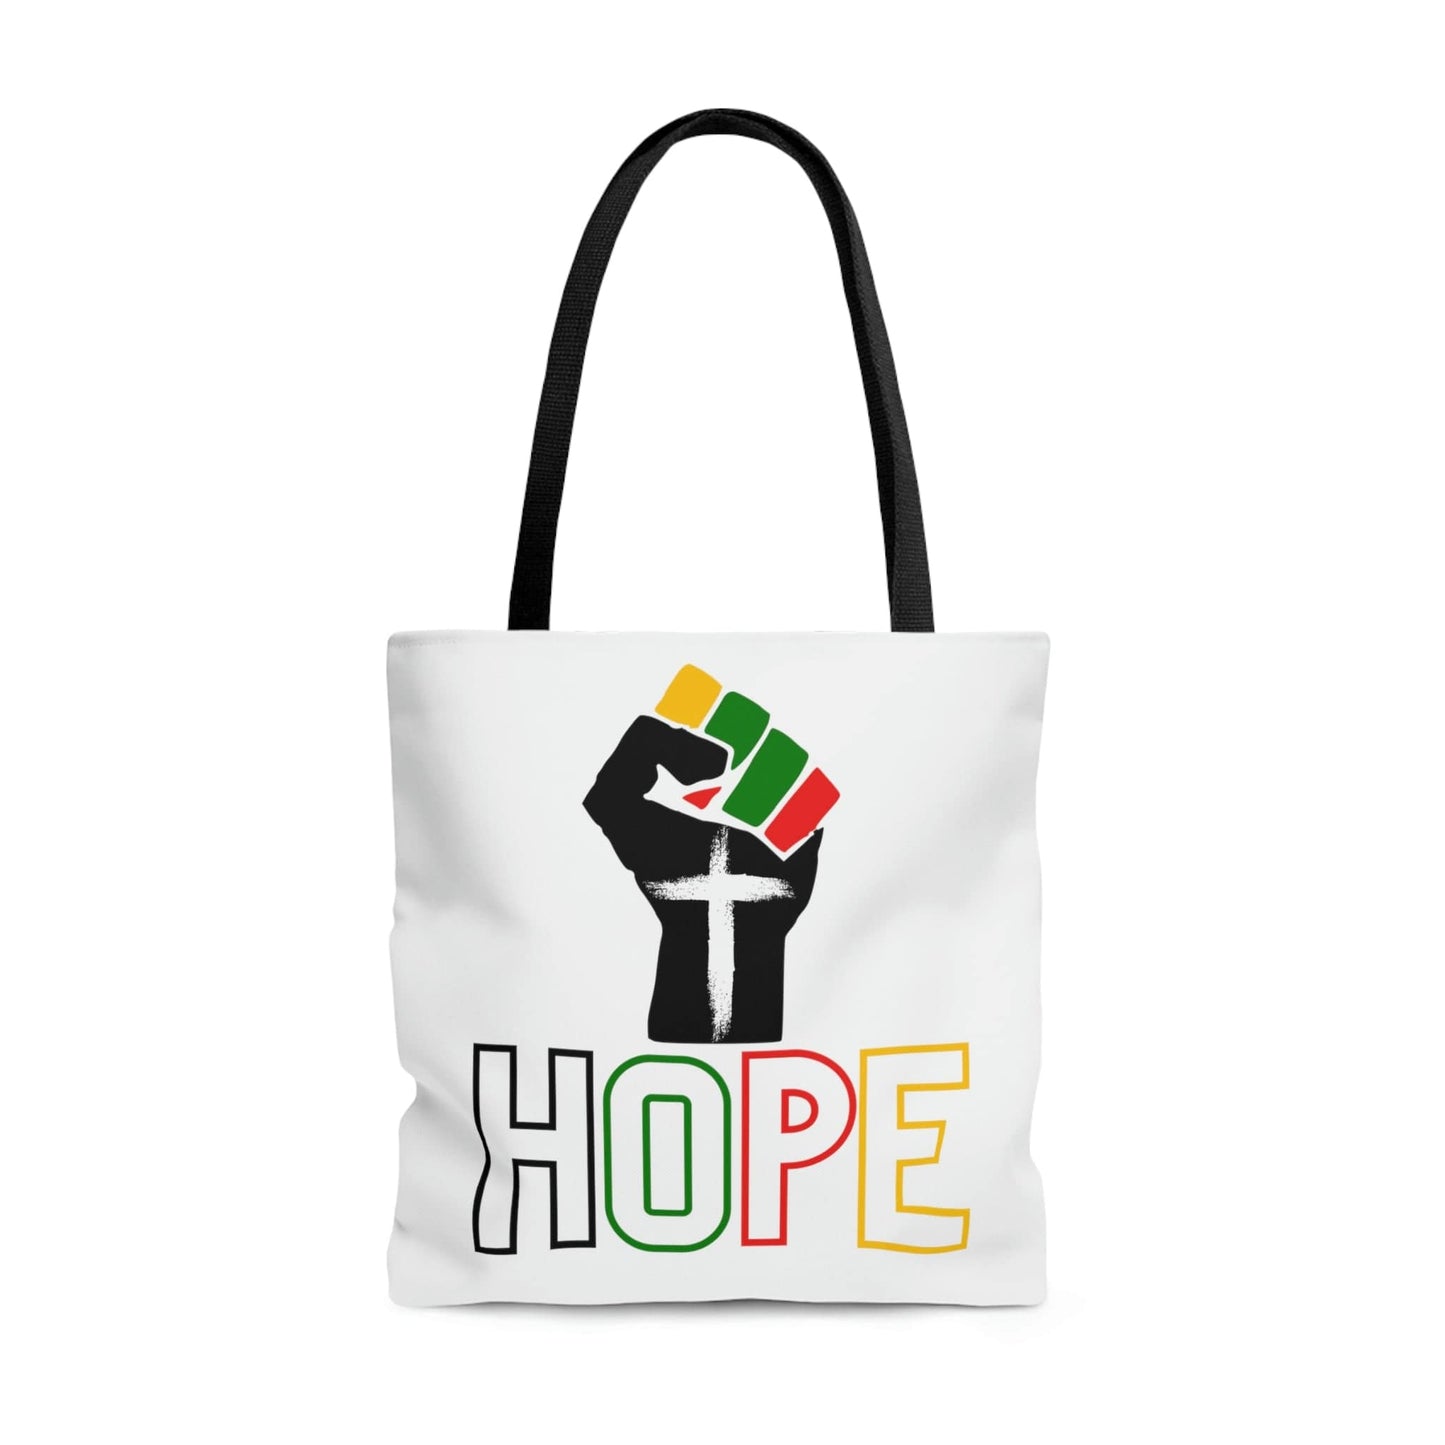 Black History Month Tote Bag, Black Power Tote Bag, Faith and Empowerment Tote Bag